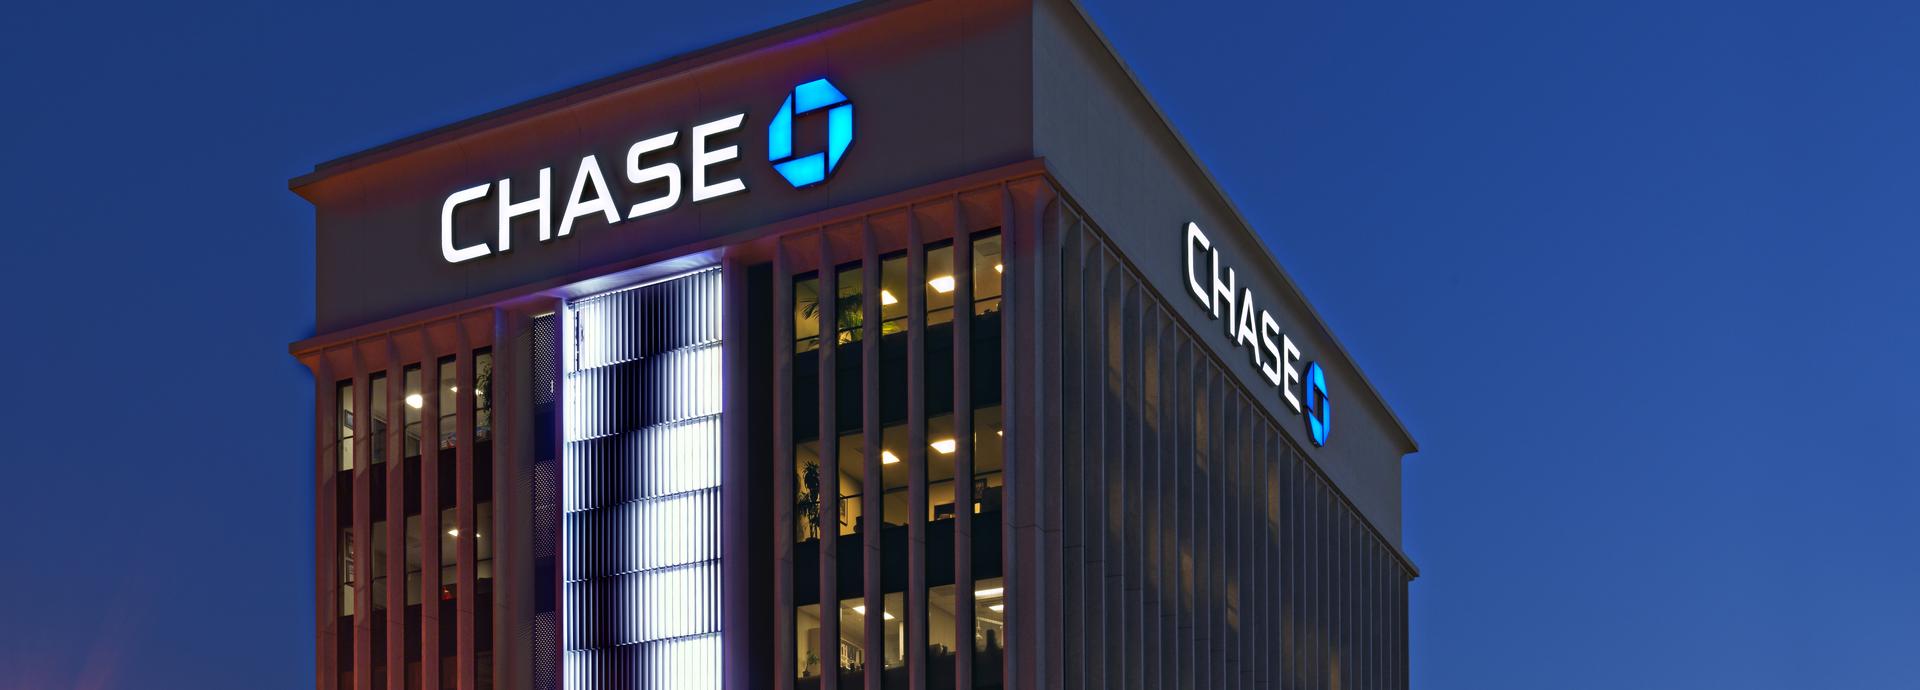 Chase Bank_5.jpg